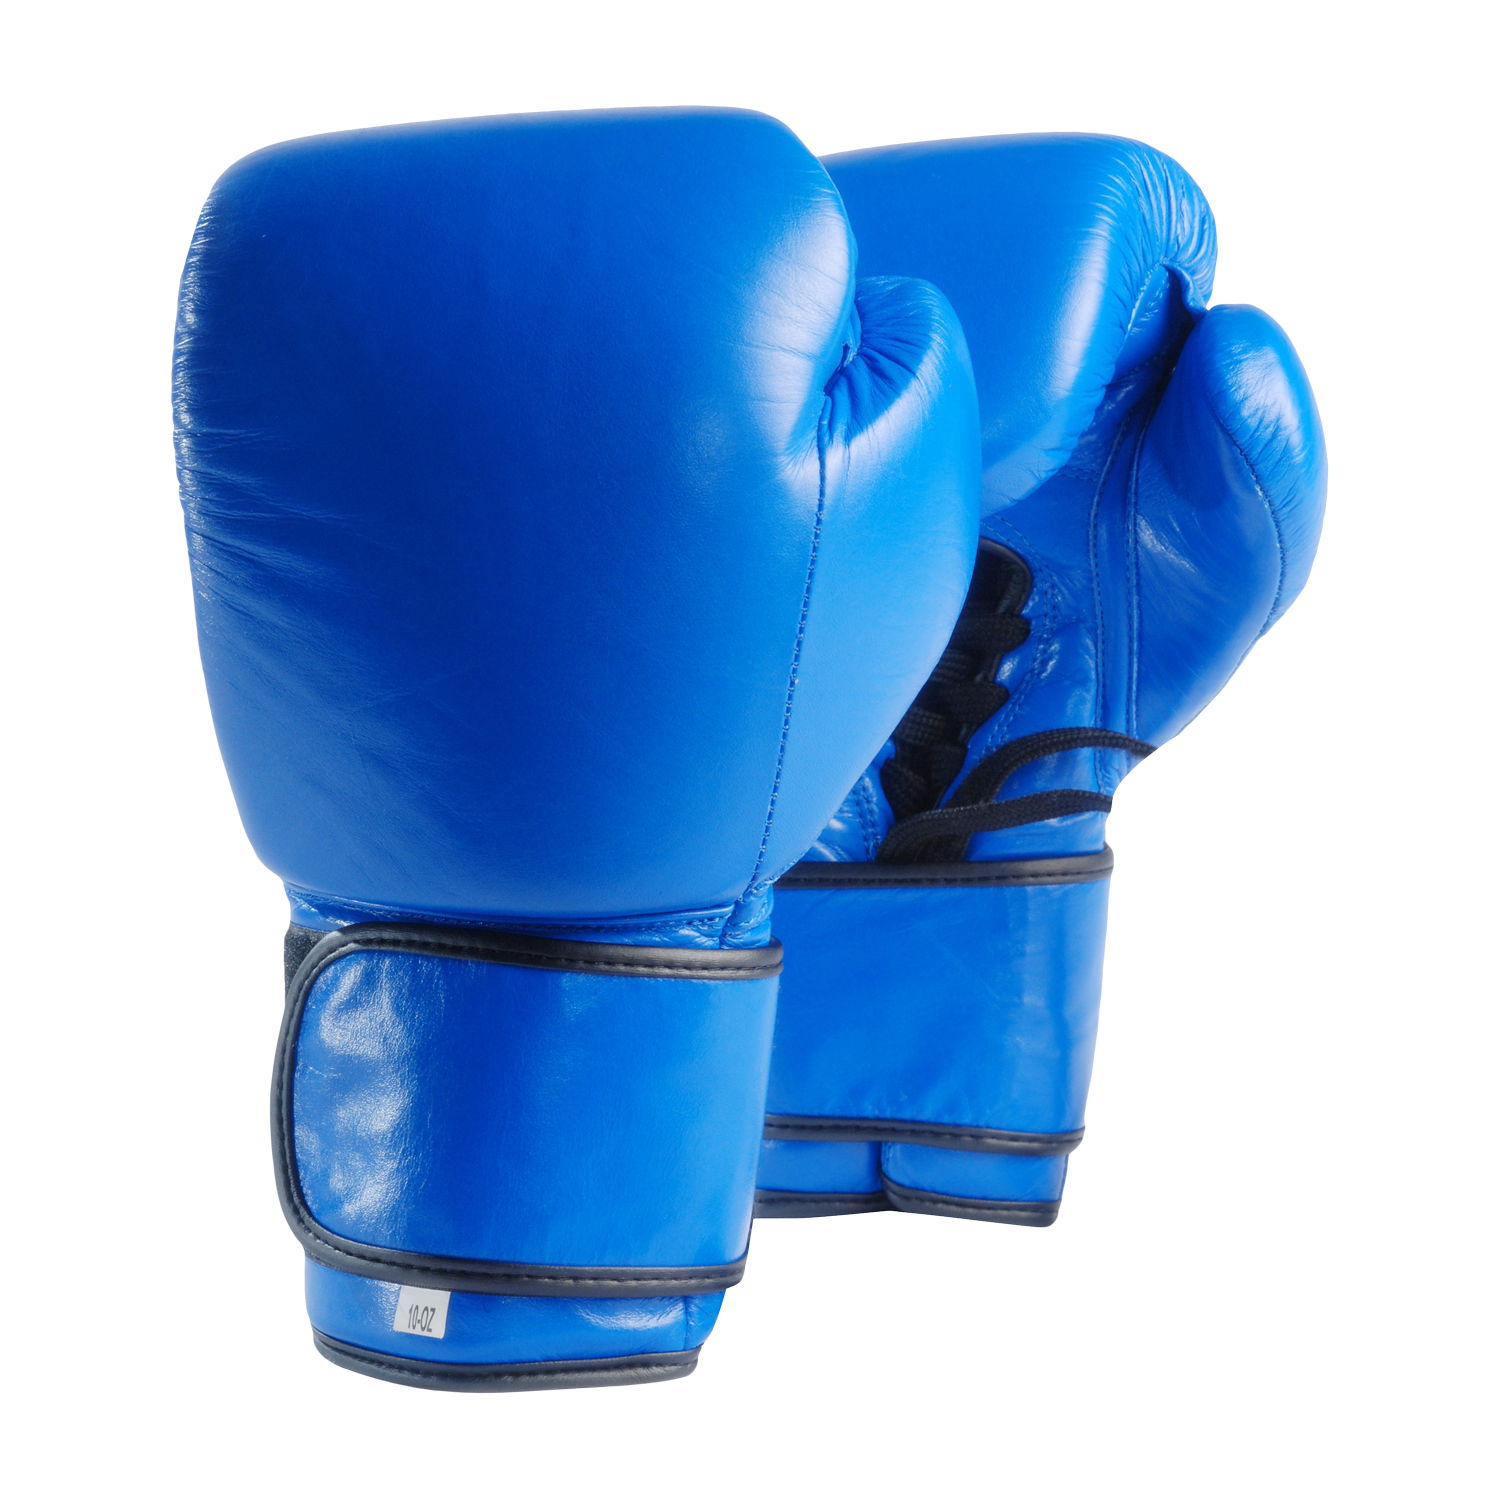 Blue Boxing Gloves Transparent Picture